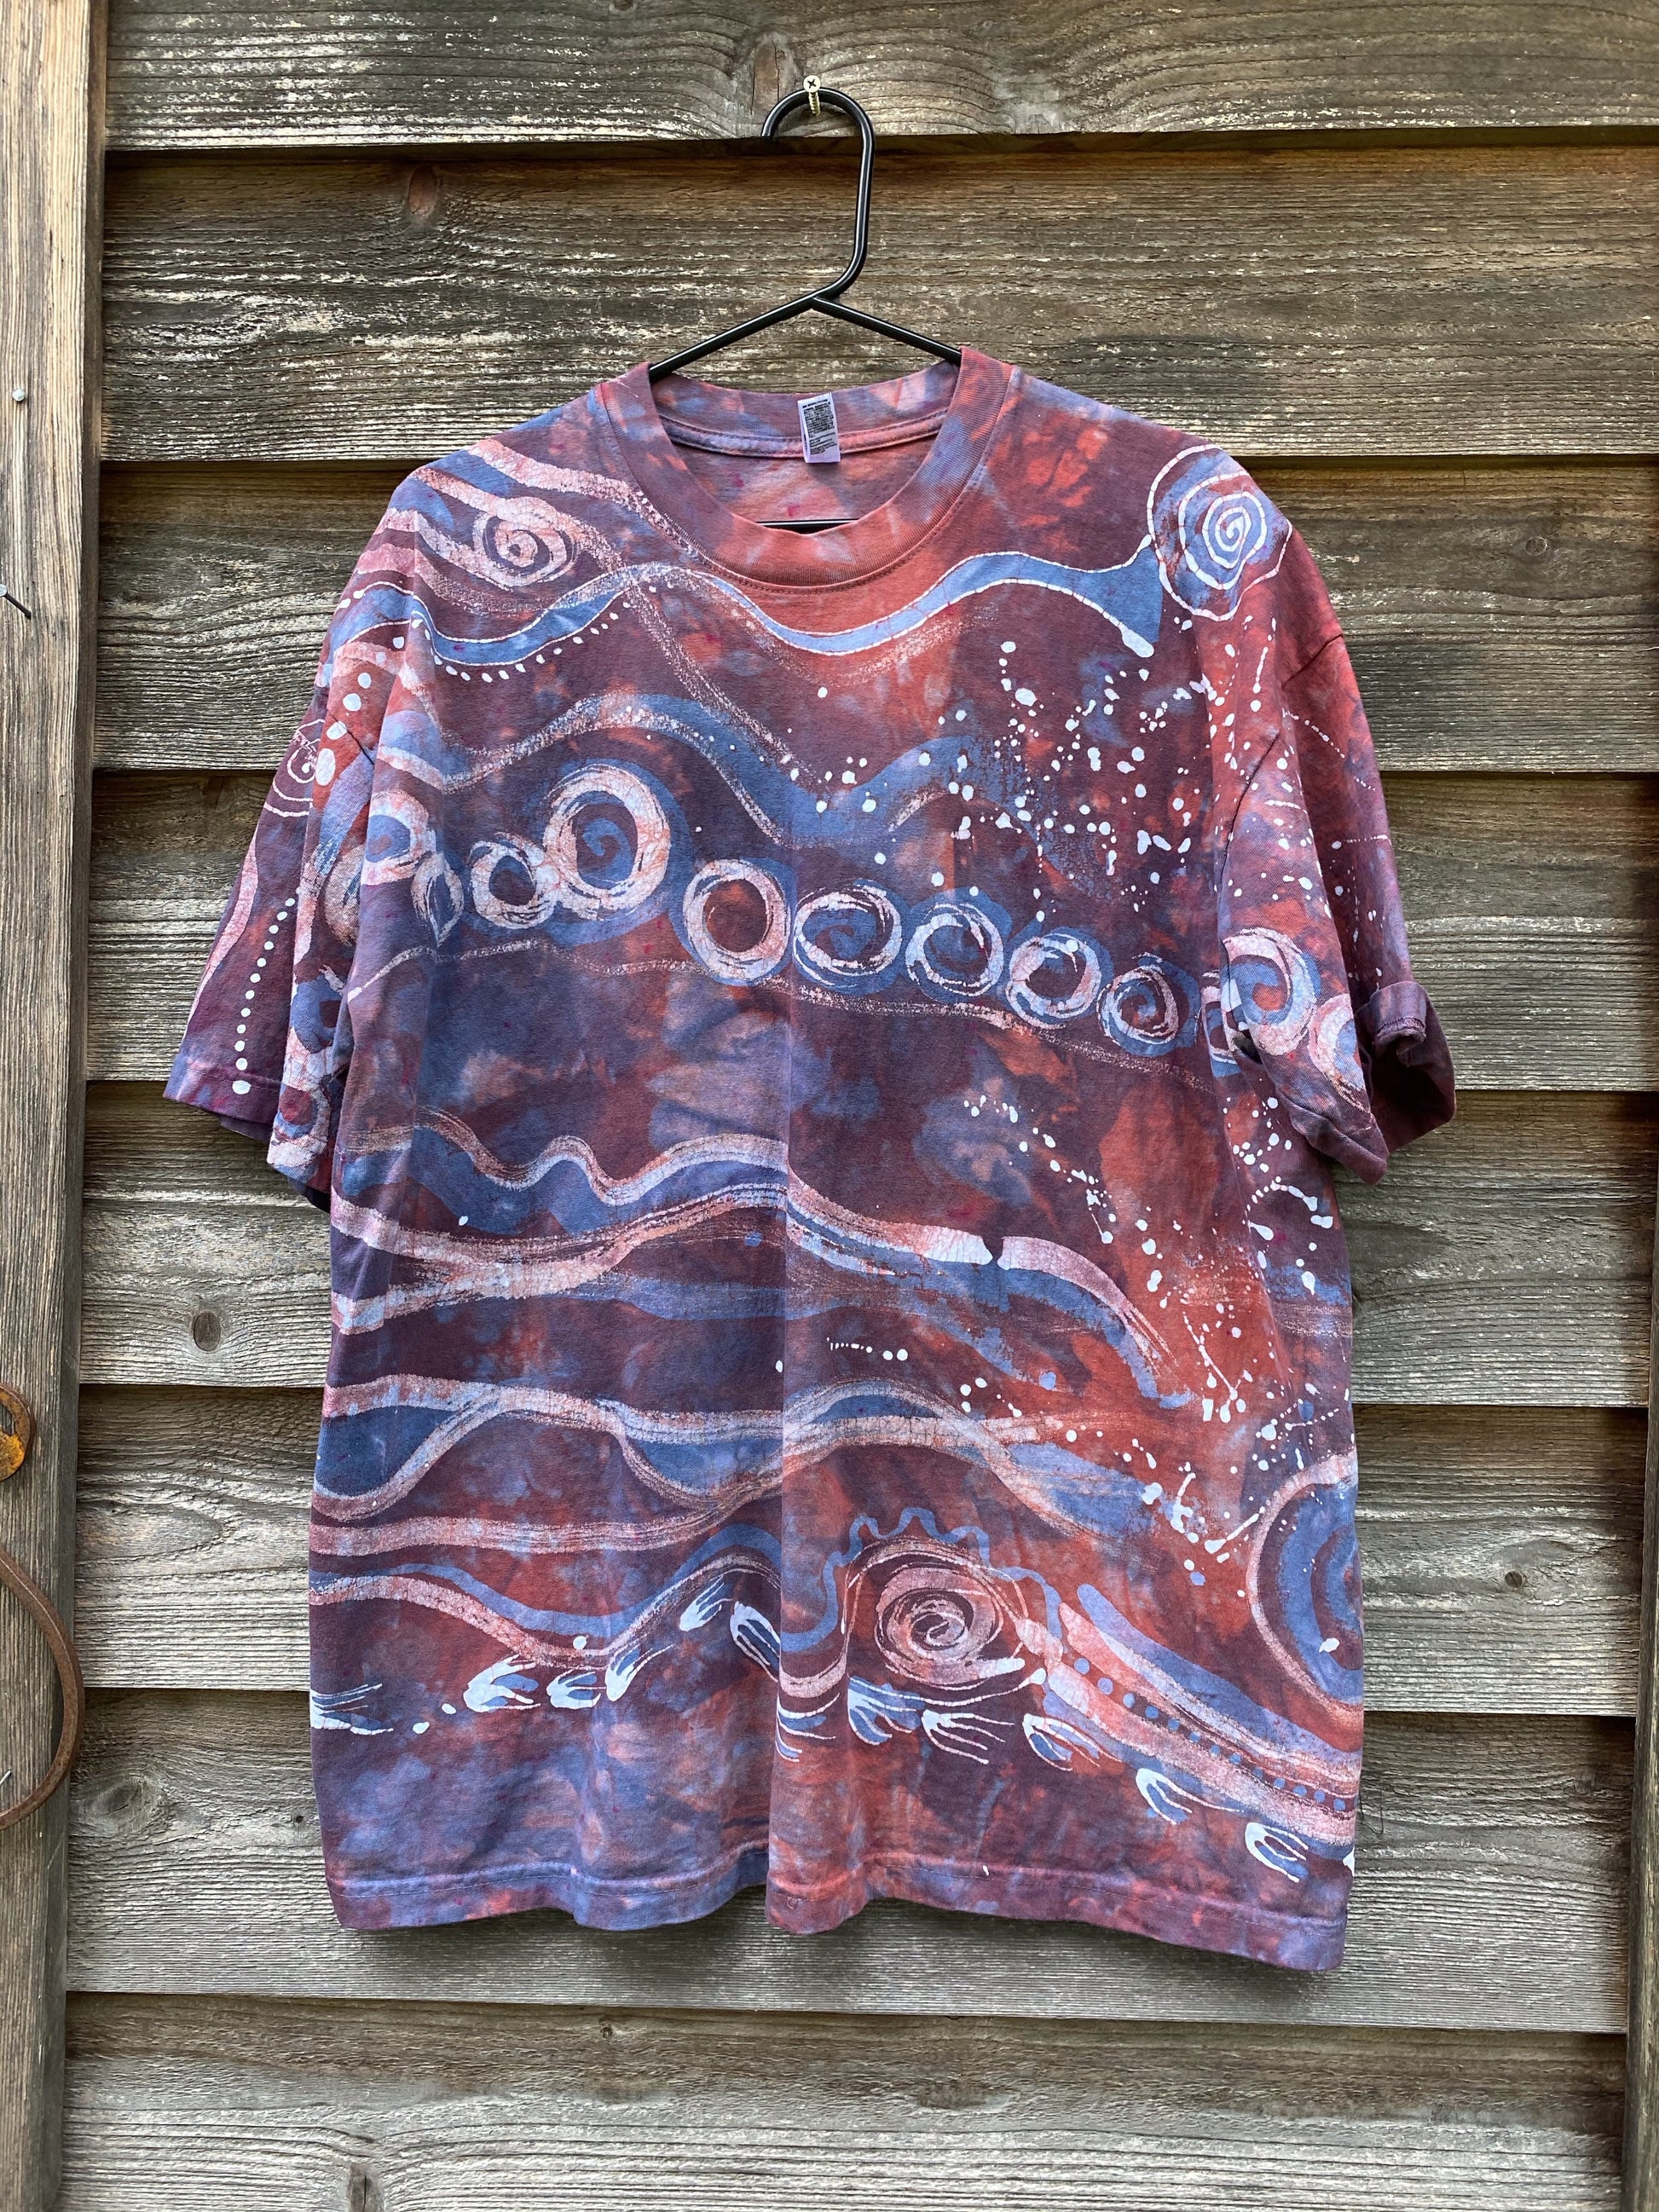 Earth and Sky Purely Intuitive Cotton Batik T-shirt - Size XL Tshirts batikwalla 